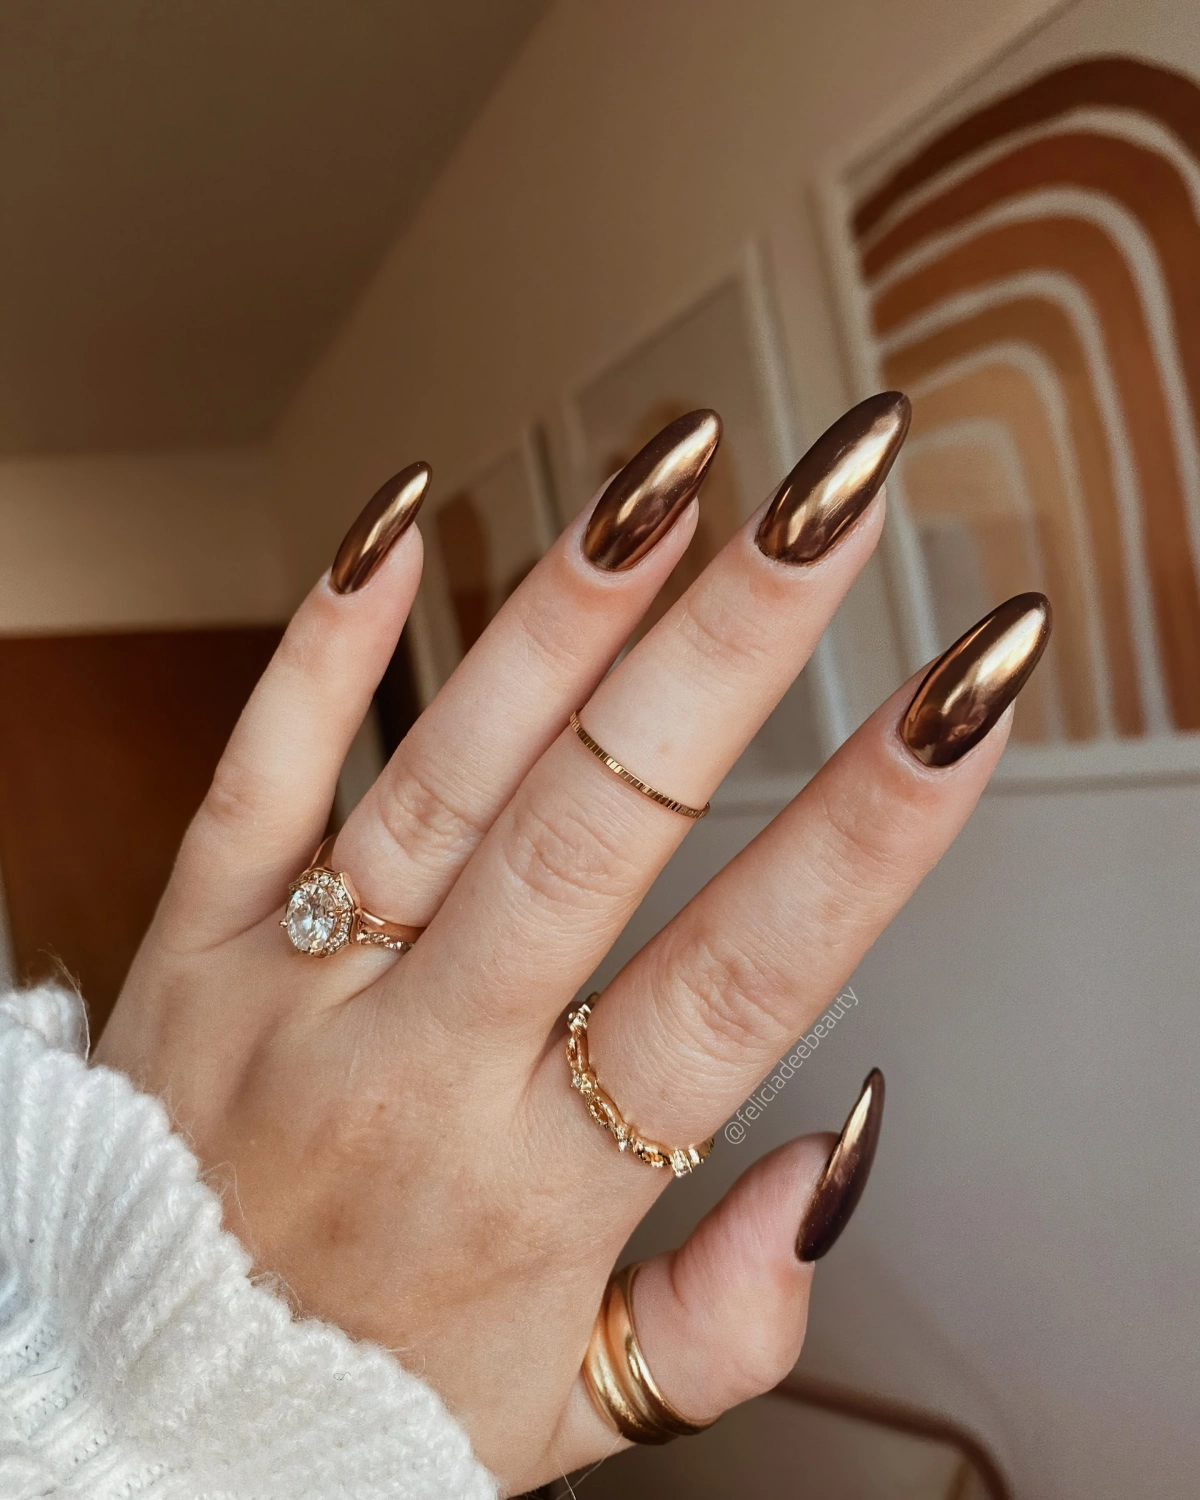 ongles titanium bronze cuivre effet metalique bagues or bijoux doigts